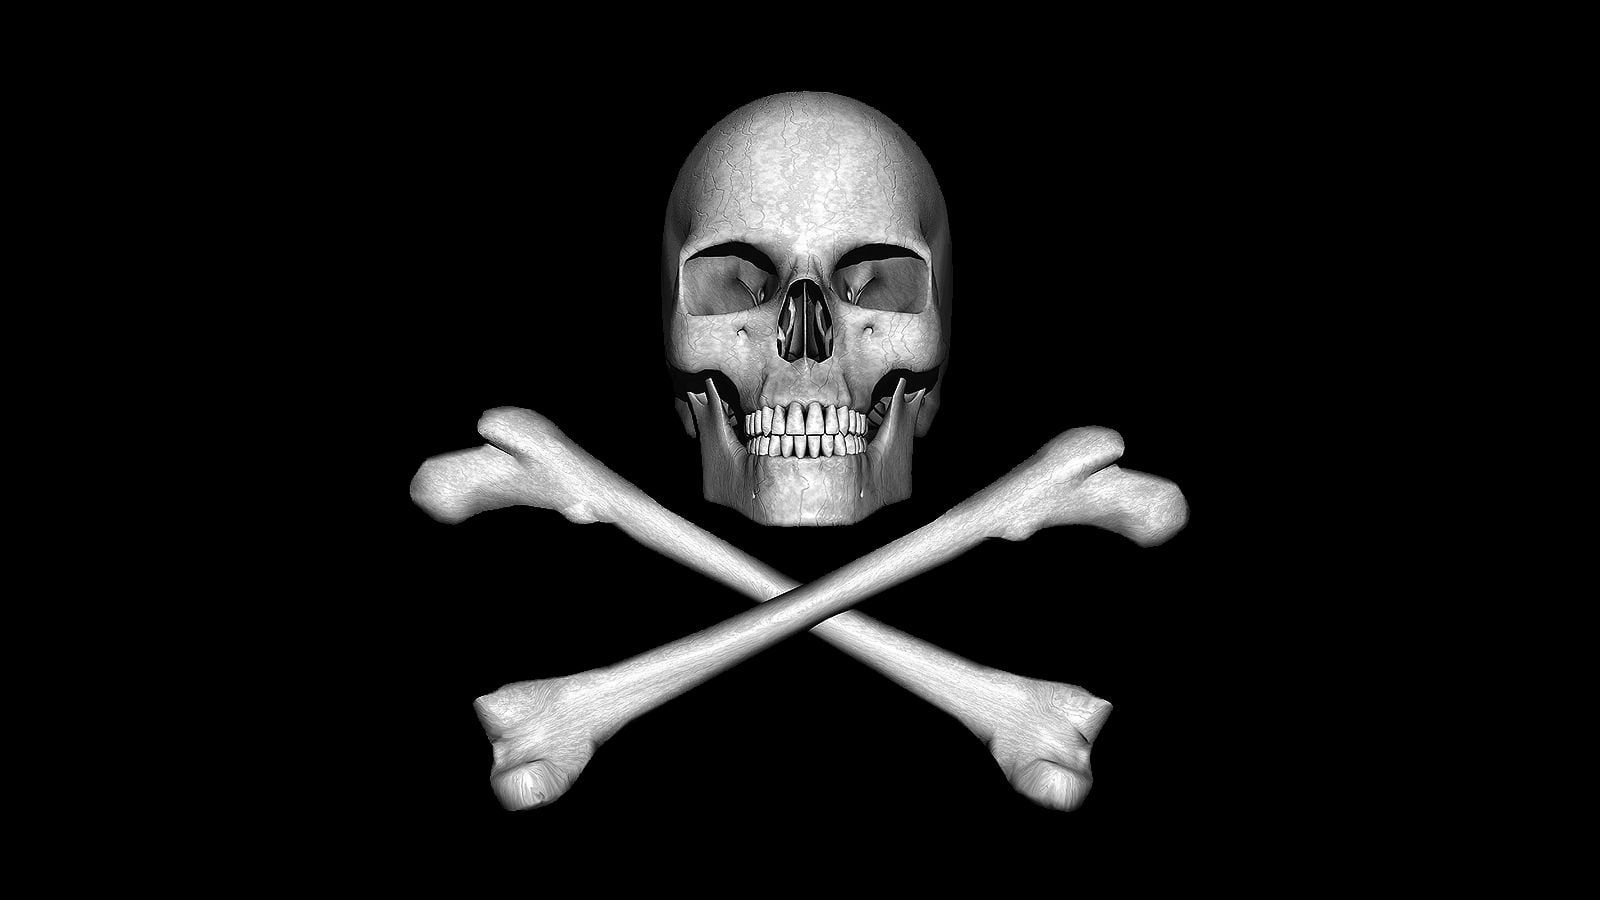 cgi, pirates, skulls, black background, studio shot, one person